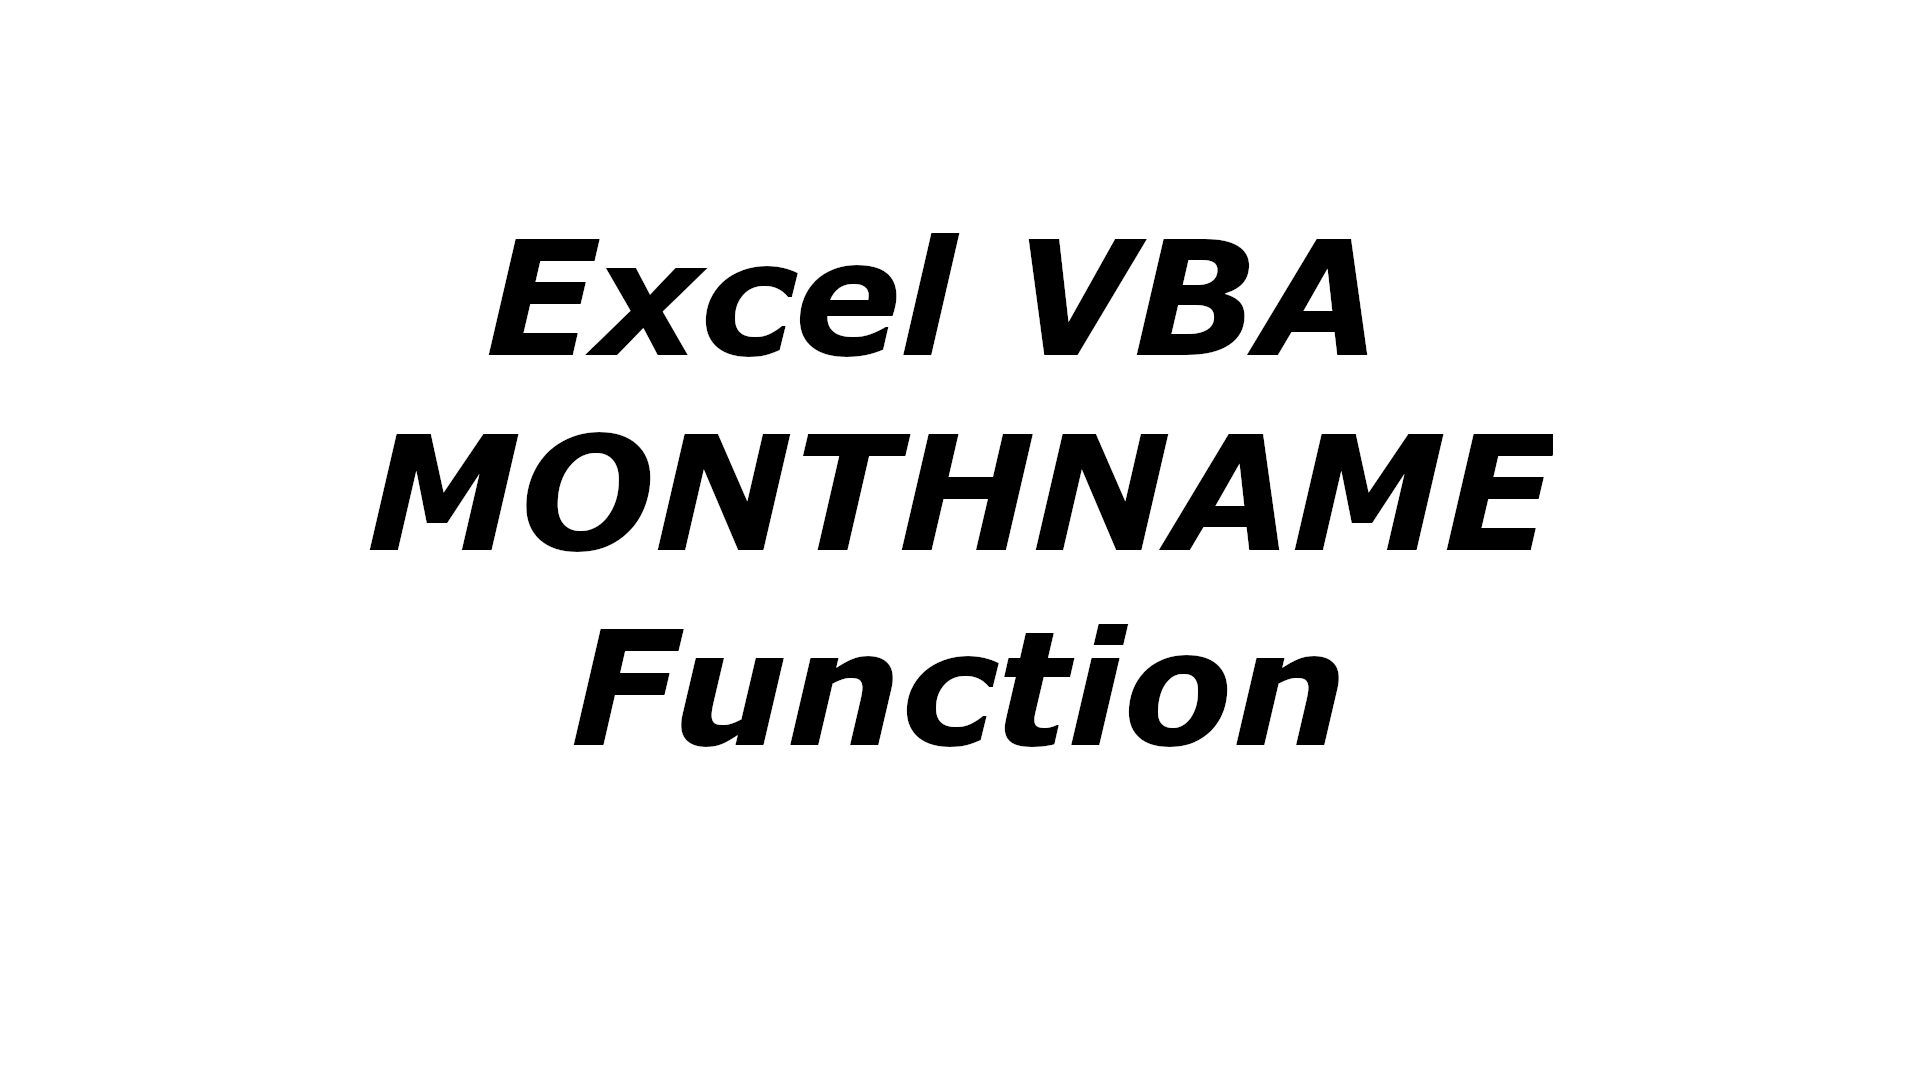 Excel VBA MONTHNAME function